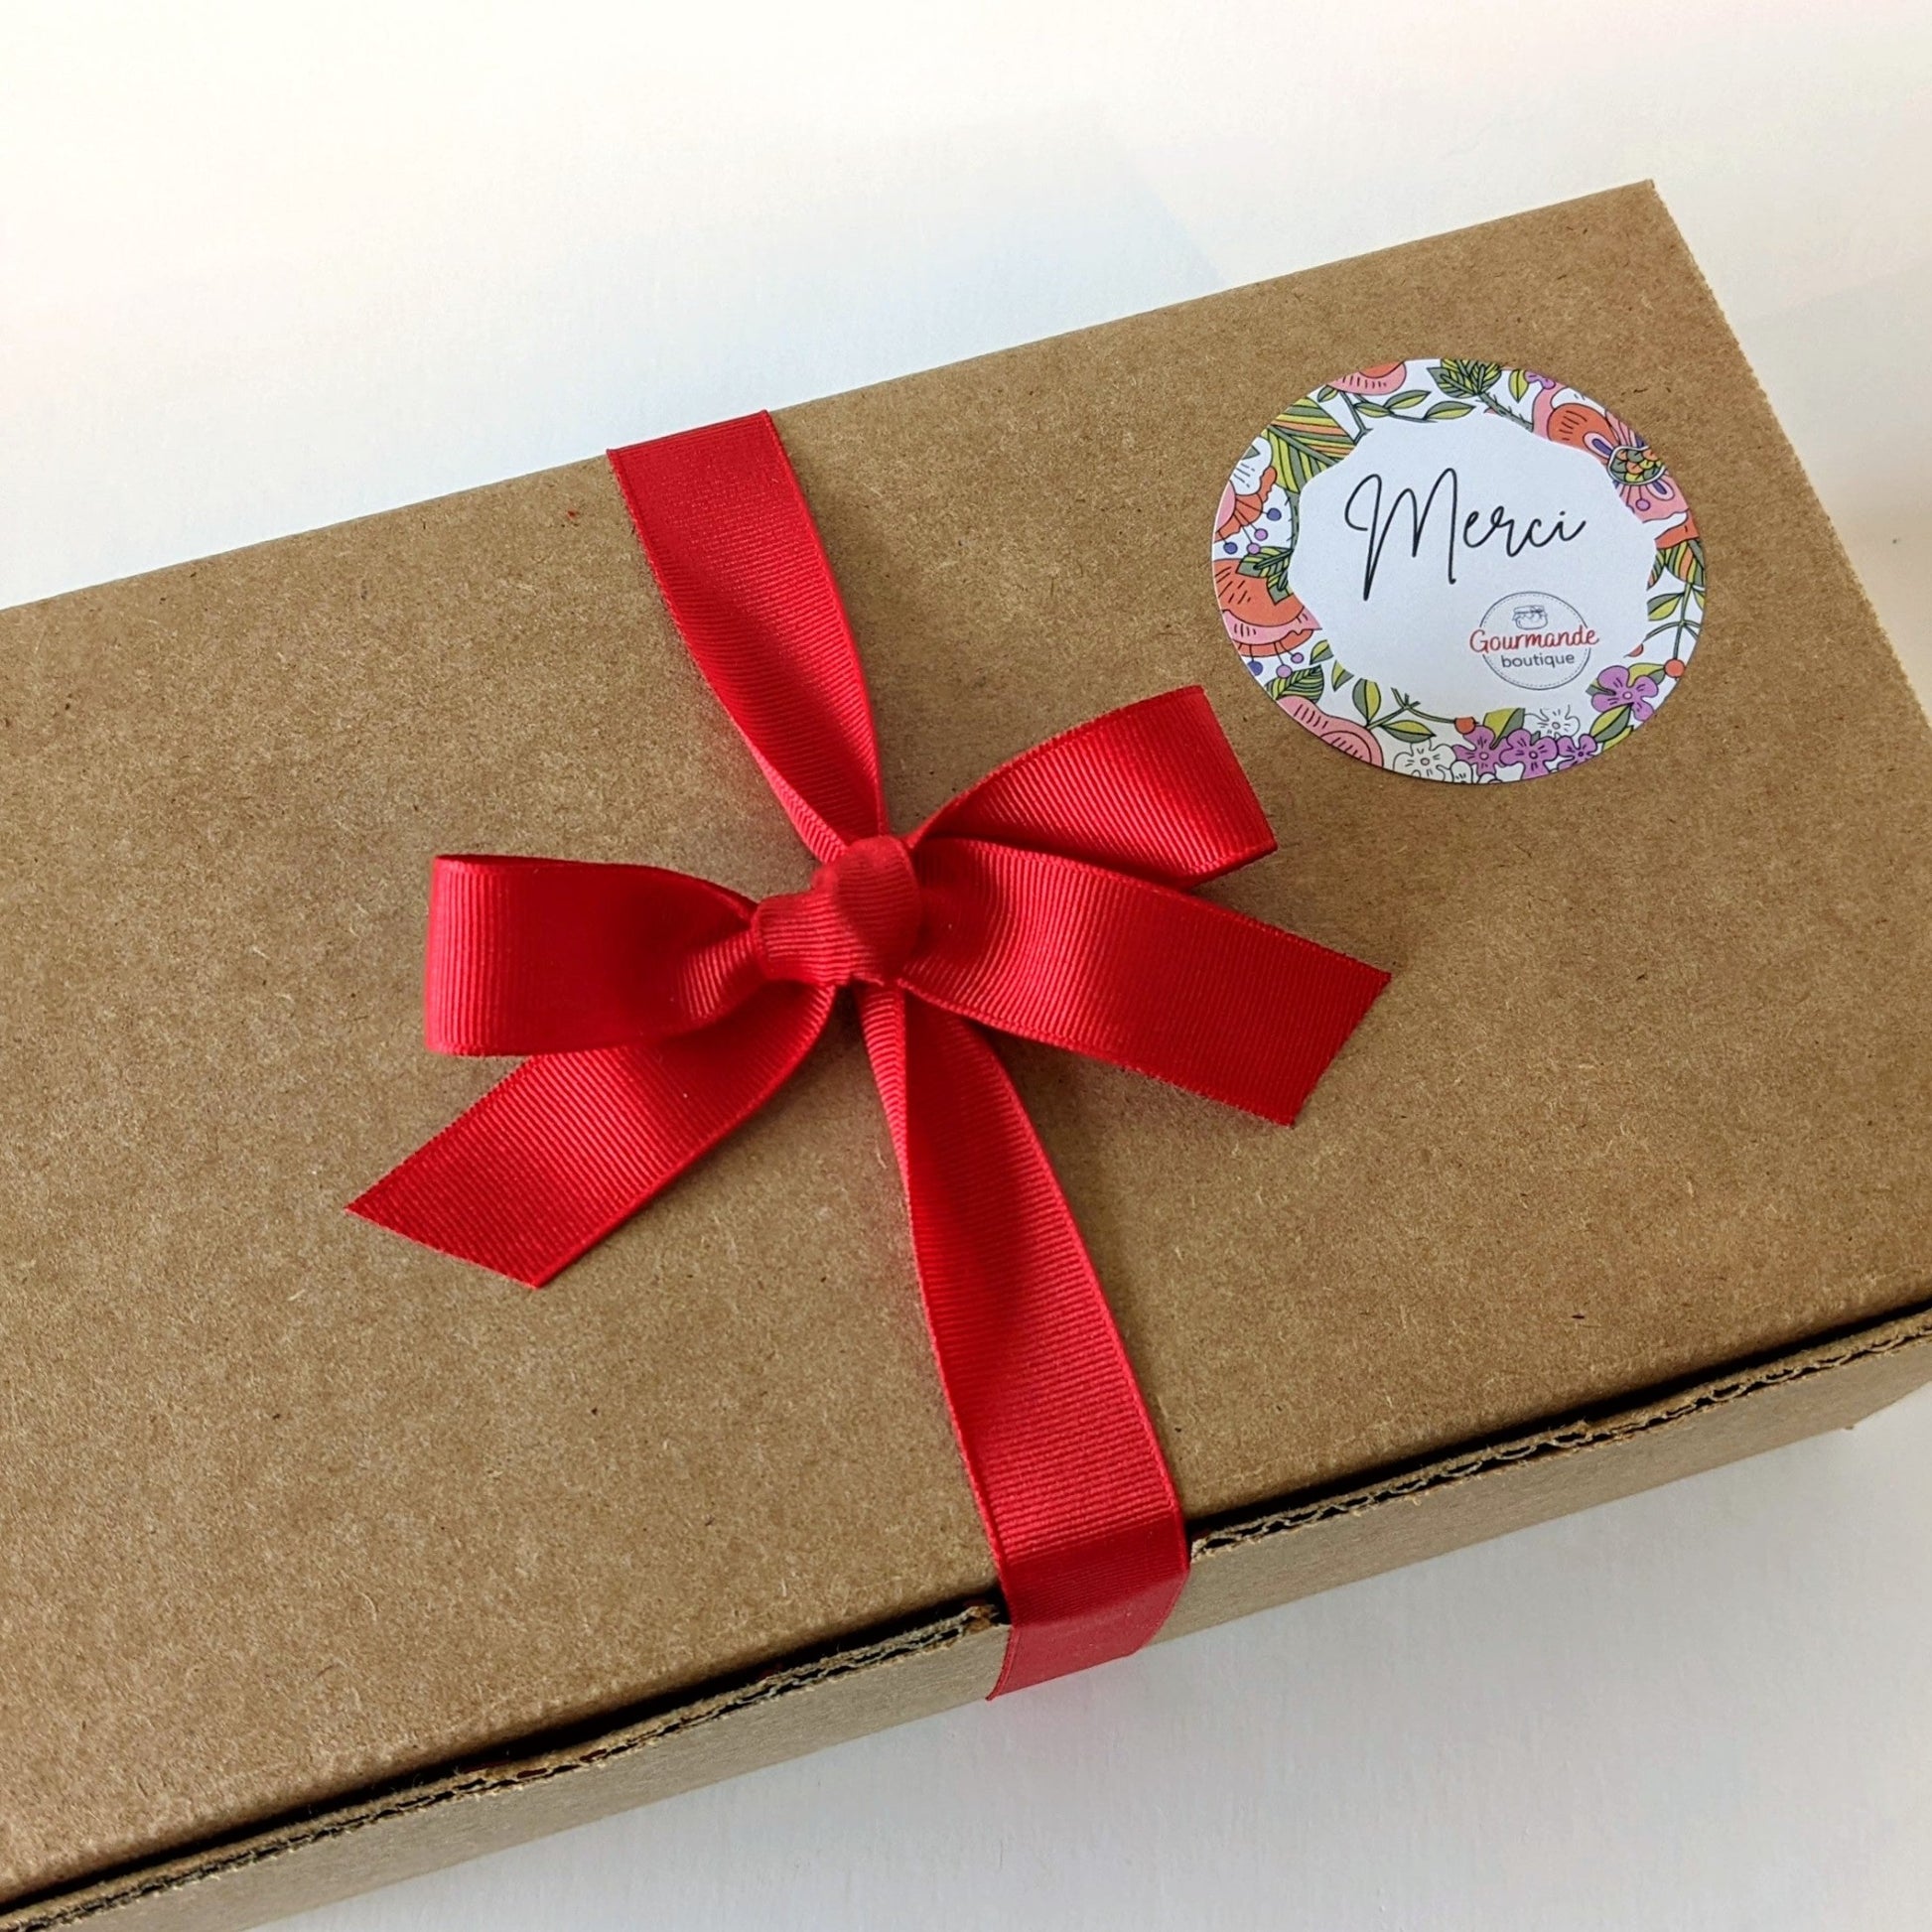 Emballage cadeau - Merci – Gourmande boutique